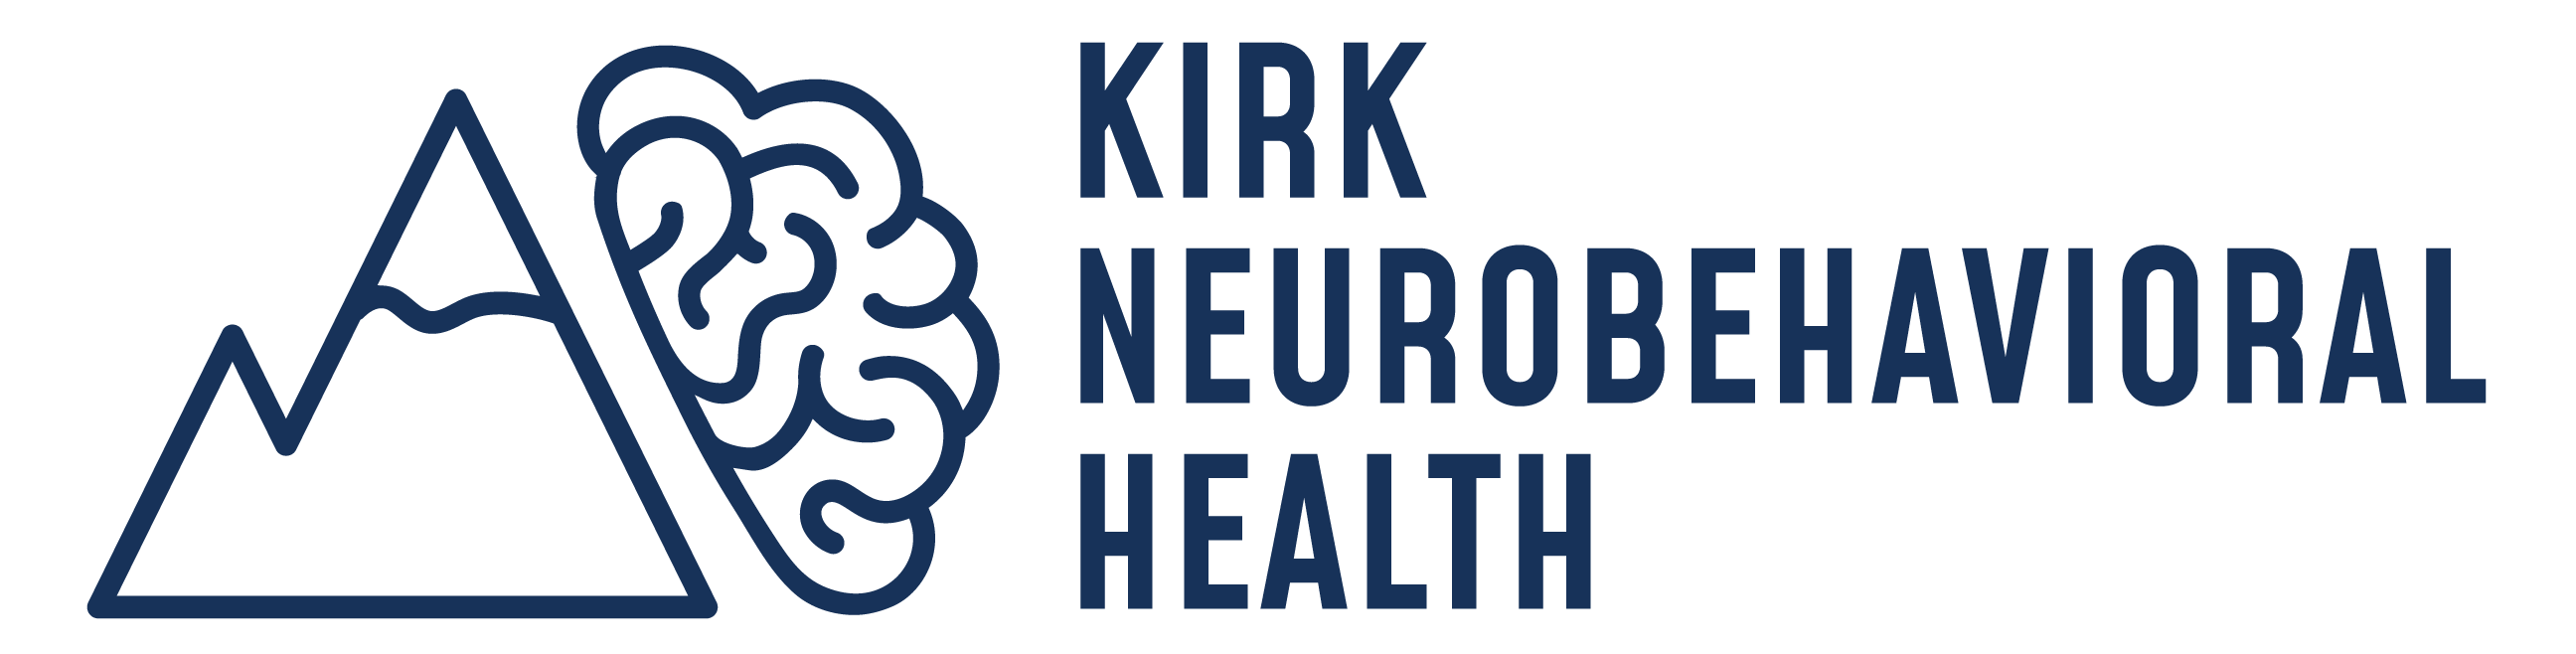 Kirk Neurobehavioral Health